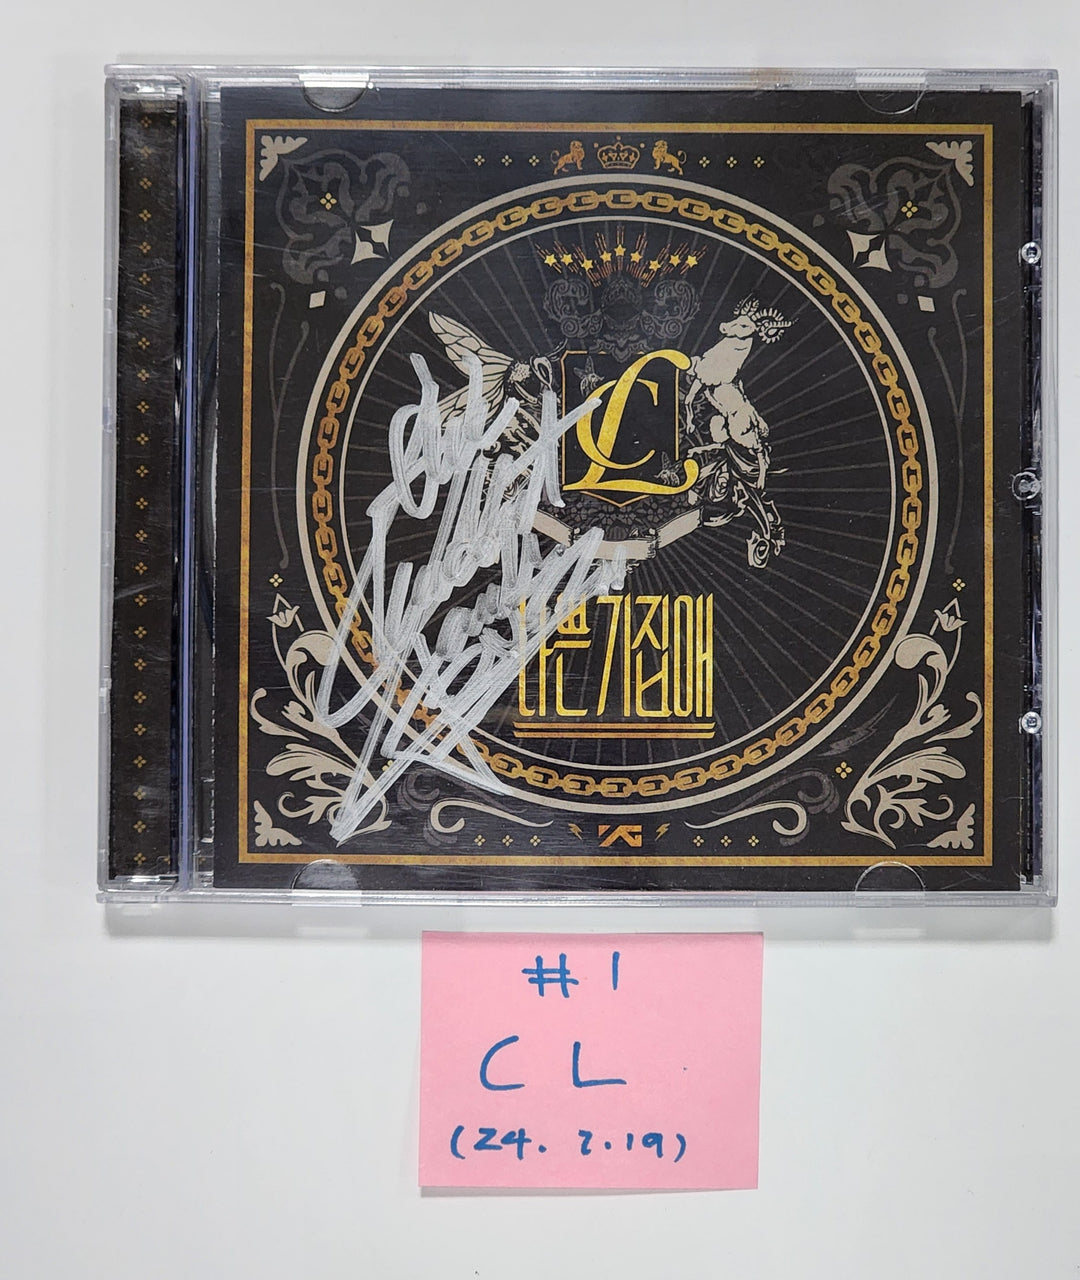 2NE1, CL - Hand Autographed(Signed) Promo Album [24.2.19]